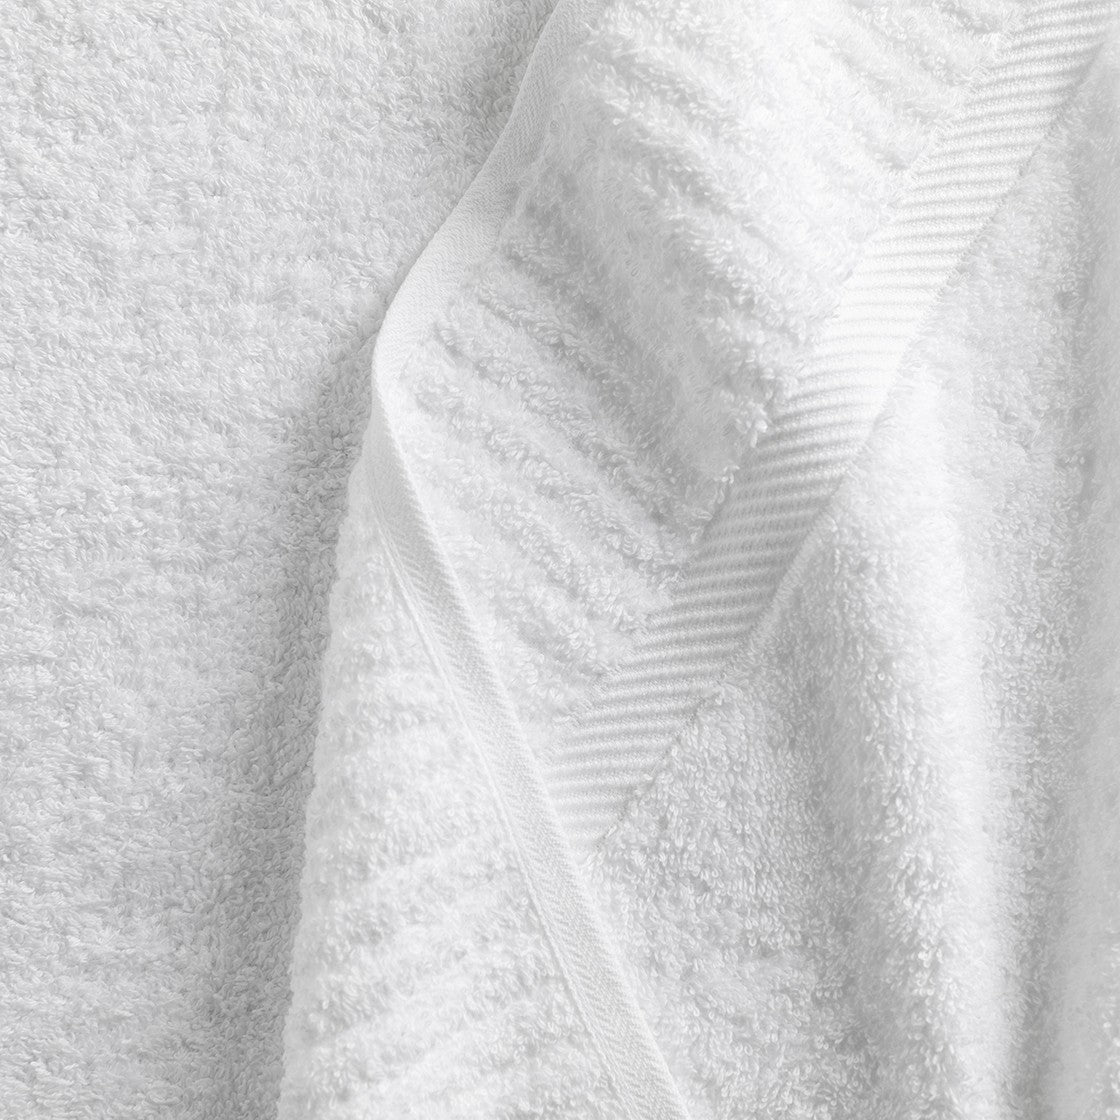 Pegasus Textiles Oasis 600 Luxury Hotel & Spa Quality White Towels